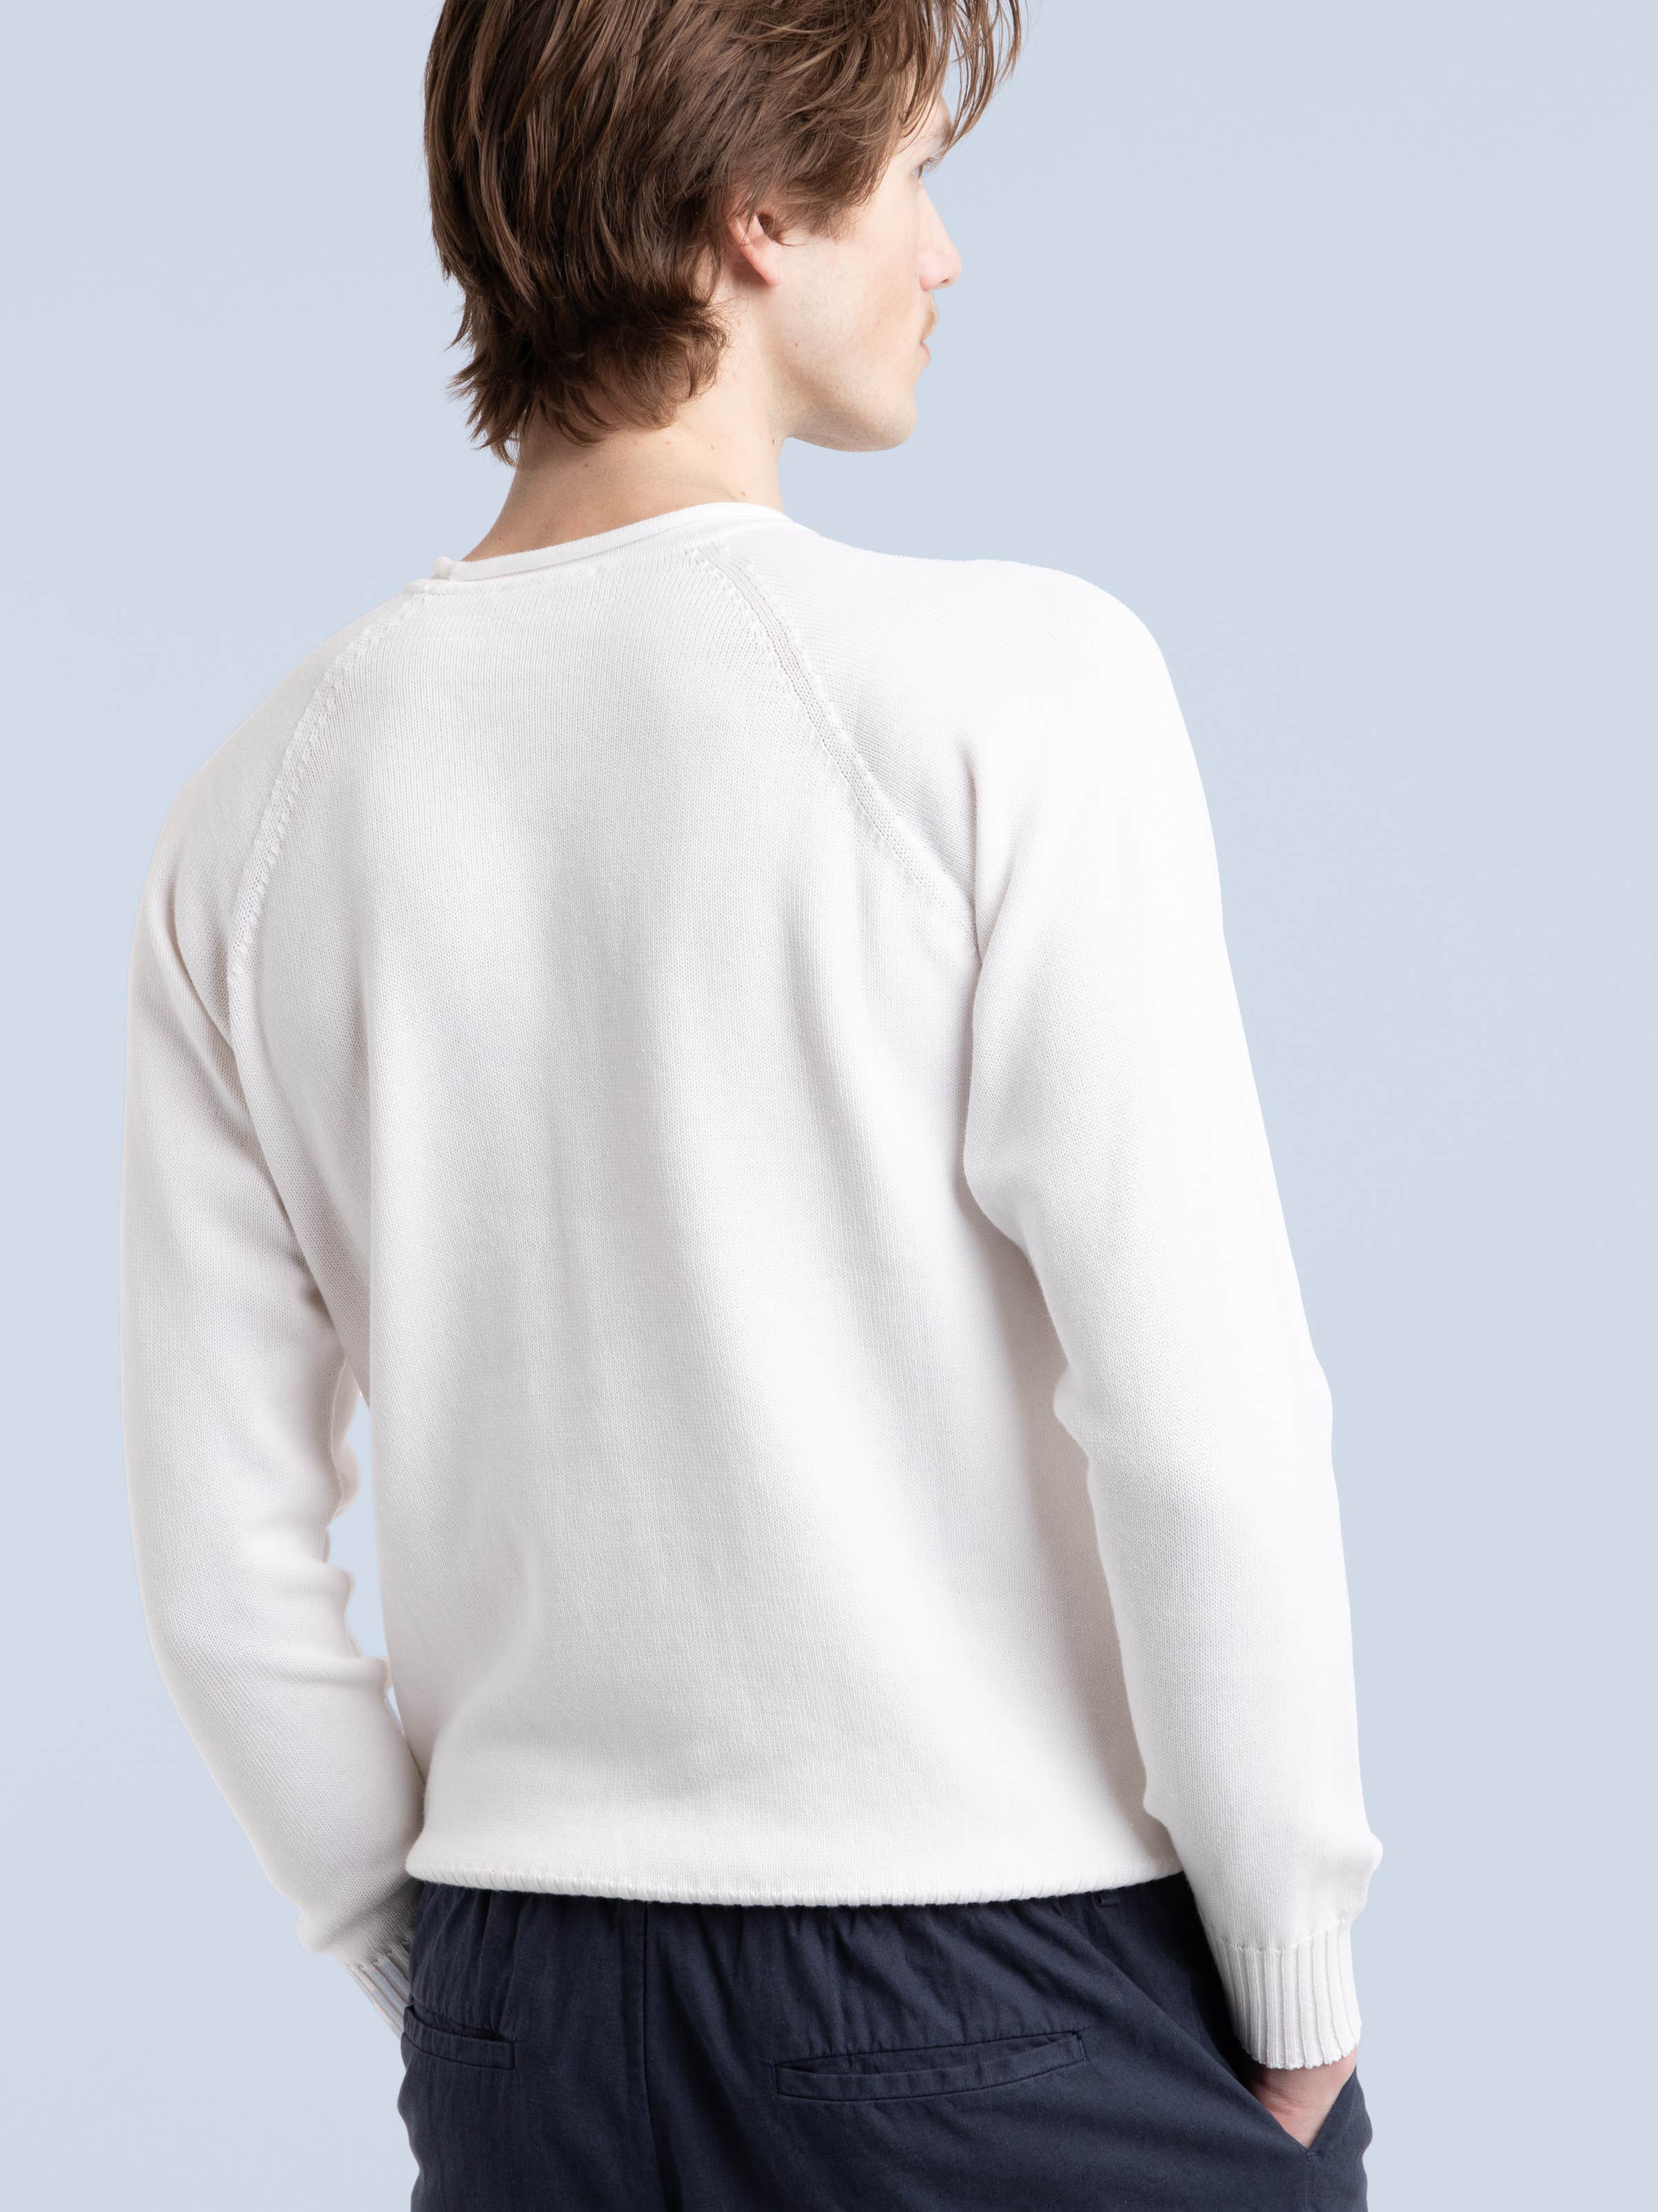 White Cotton Crewneck Sweater